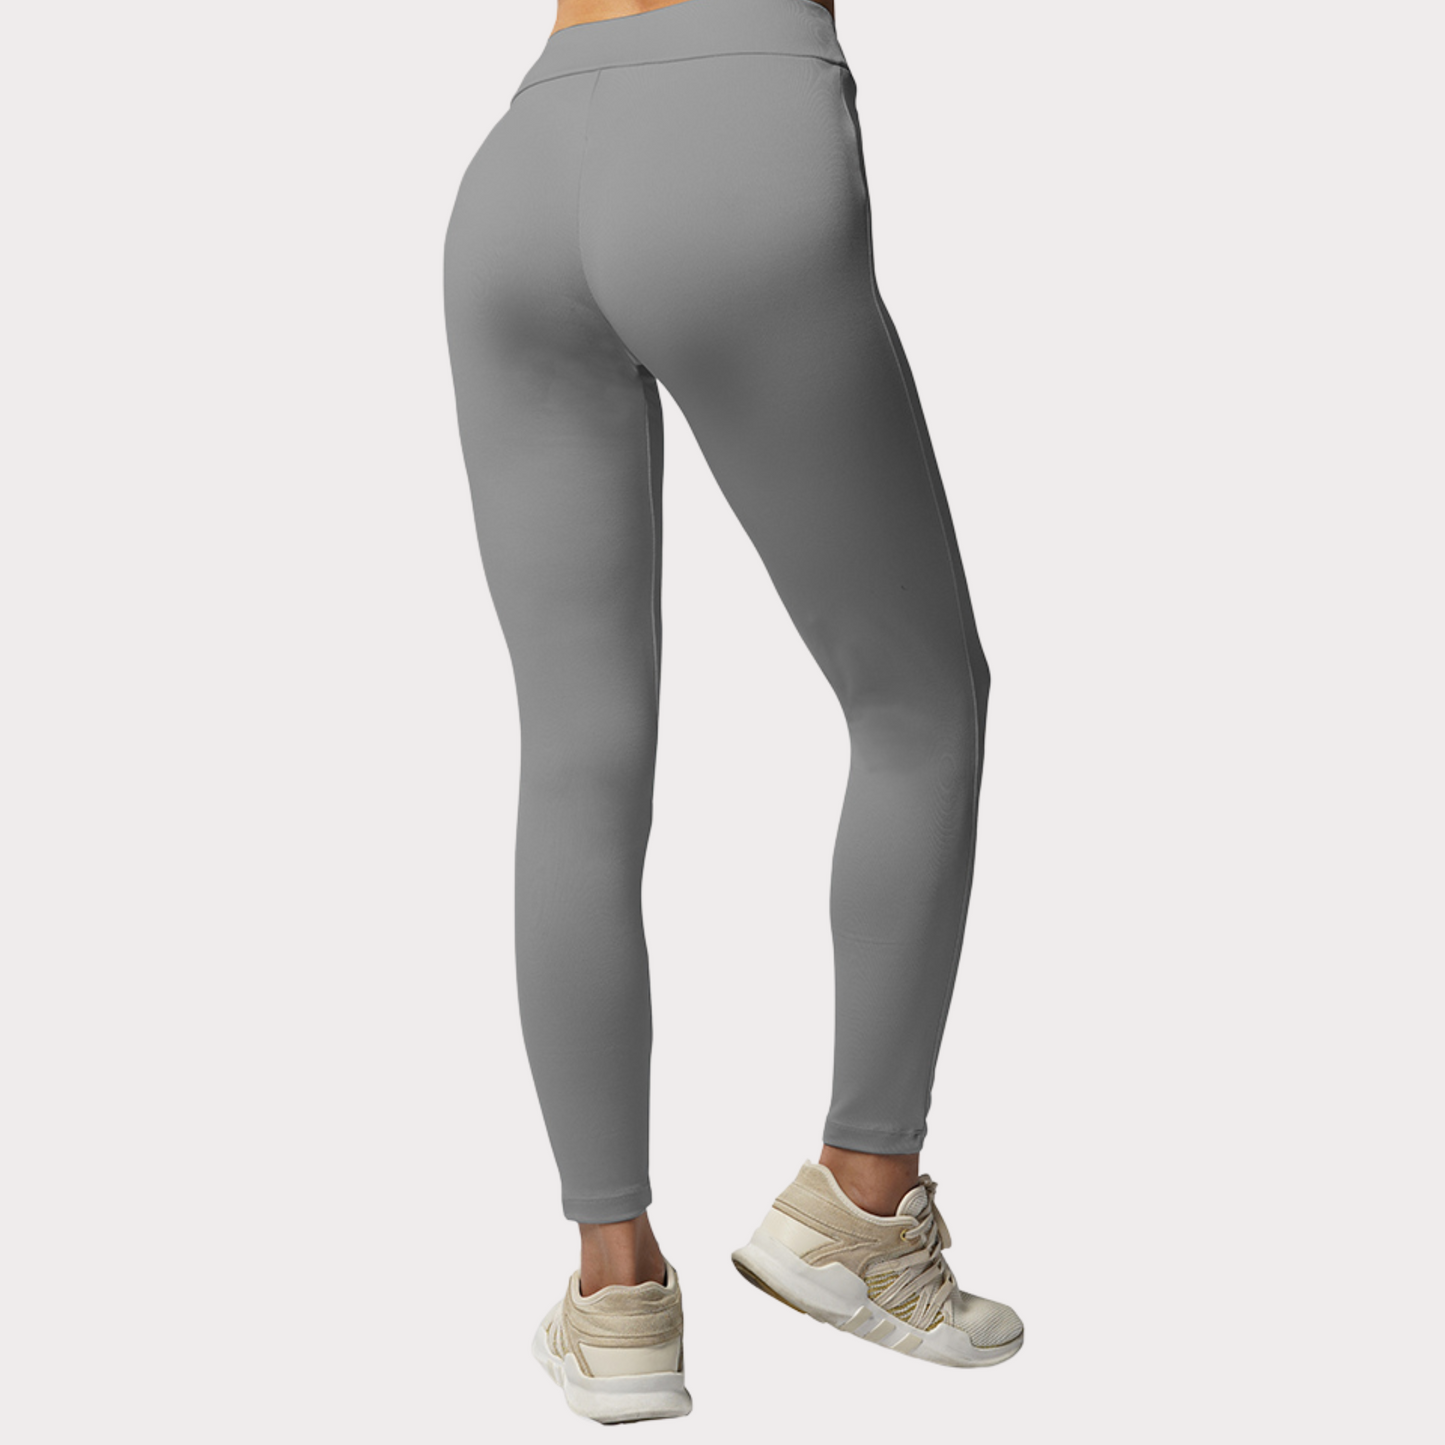 Capri & Leggings Activewear / Sportswear - Women's Essential Leggings - S / Ashton Grey - Outperformer